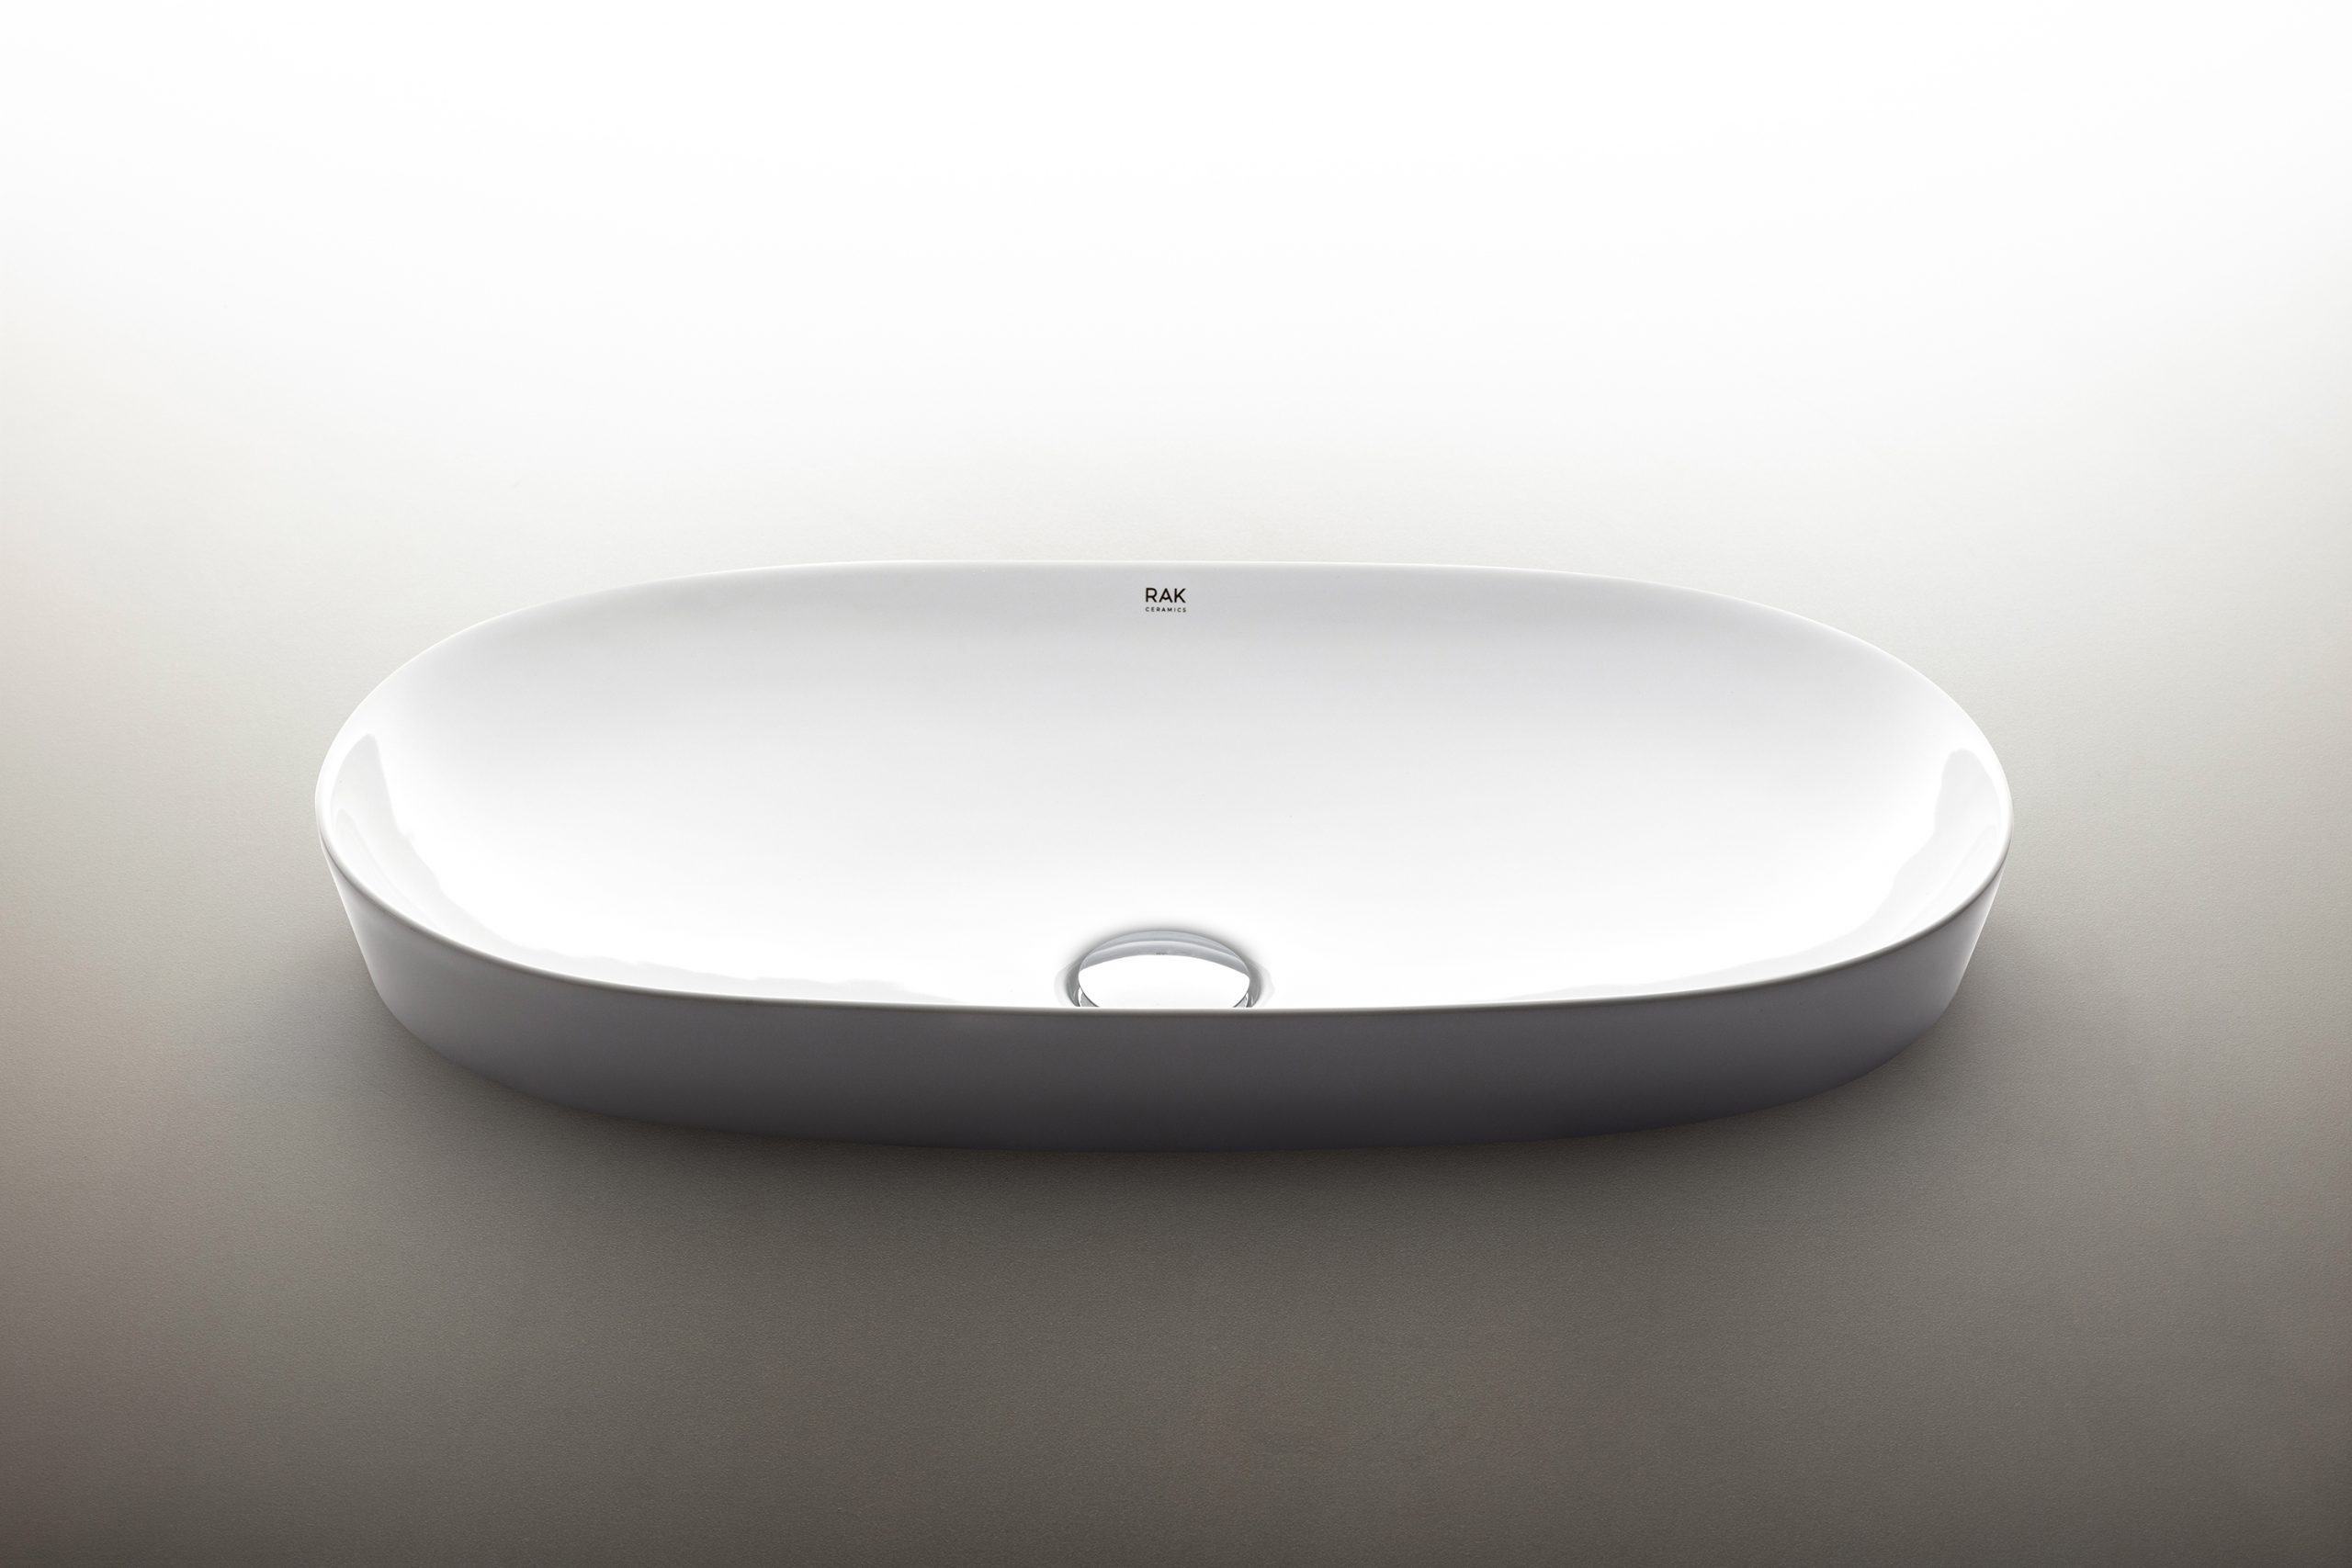 Oval Variant washbasin designed by Debiasi Sandri for RAK Ceramics